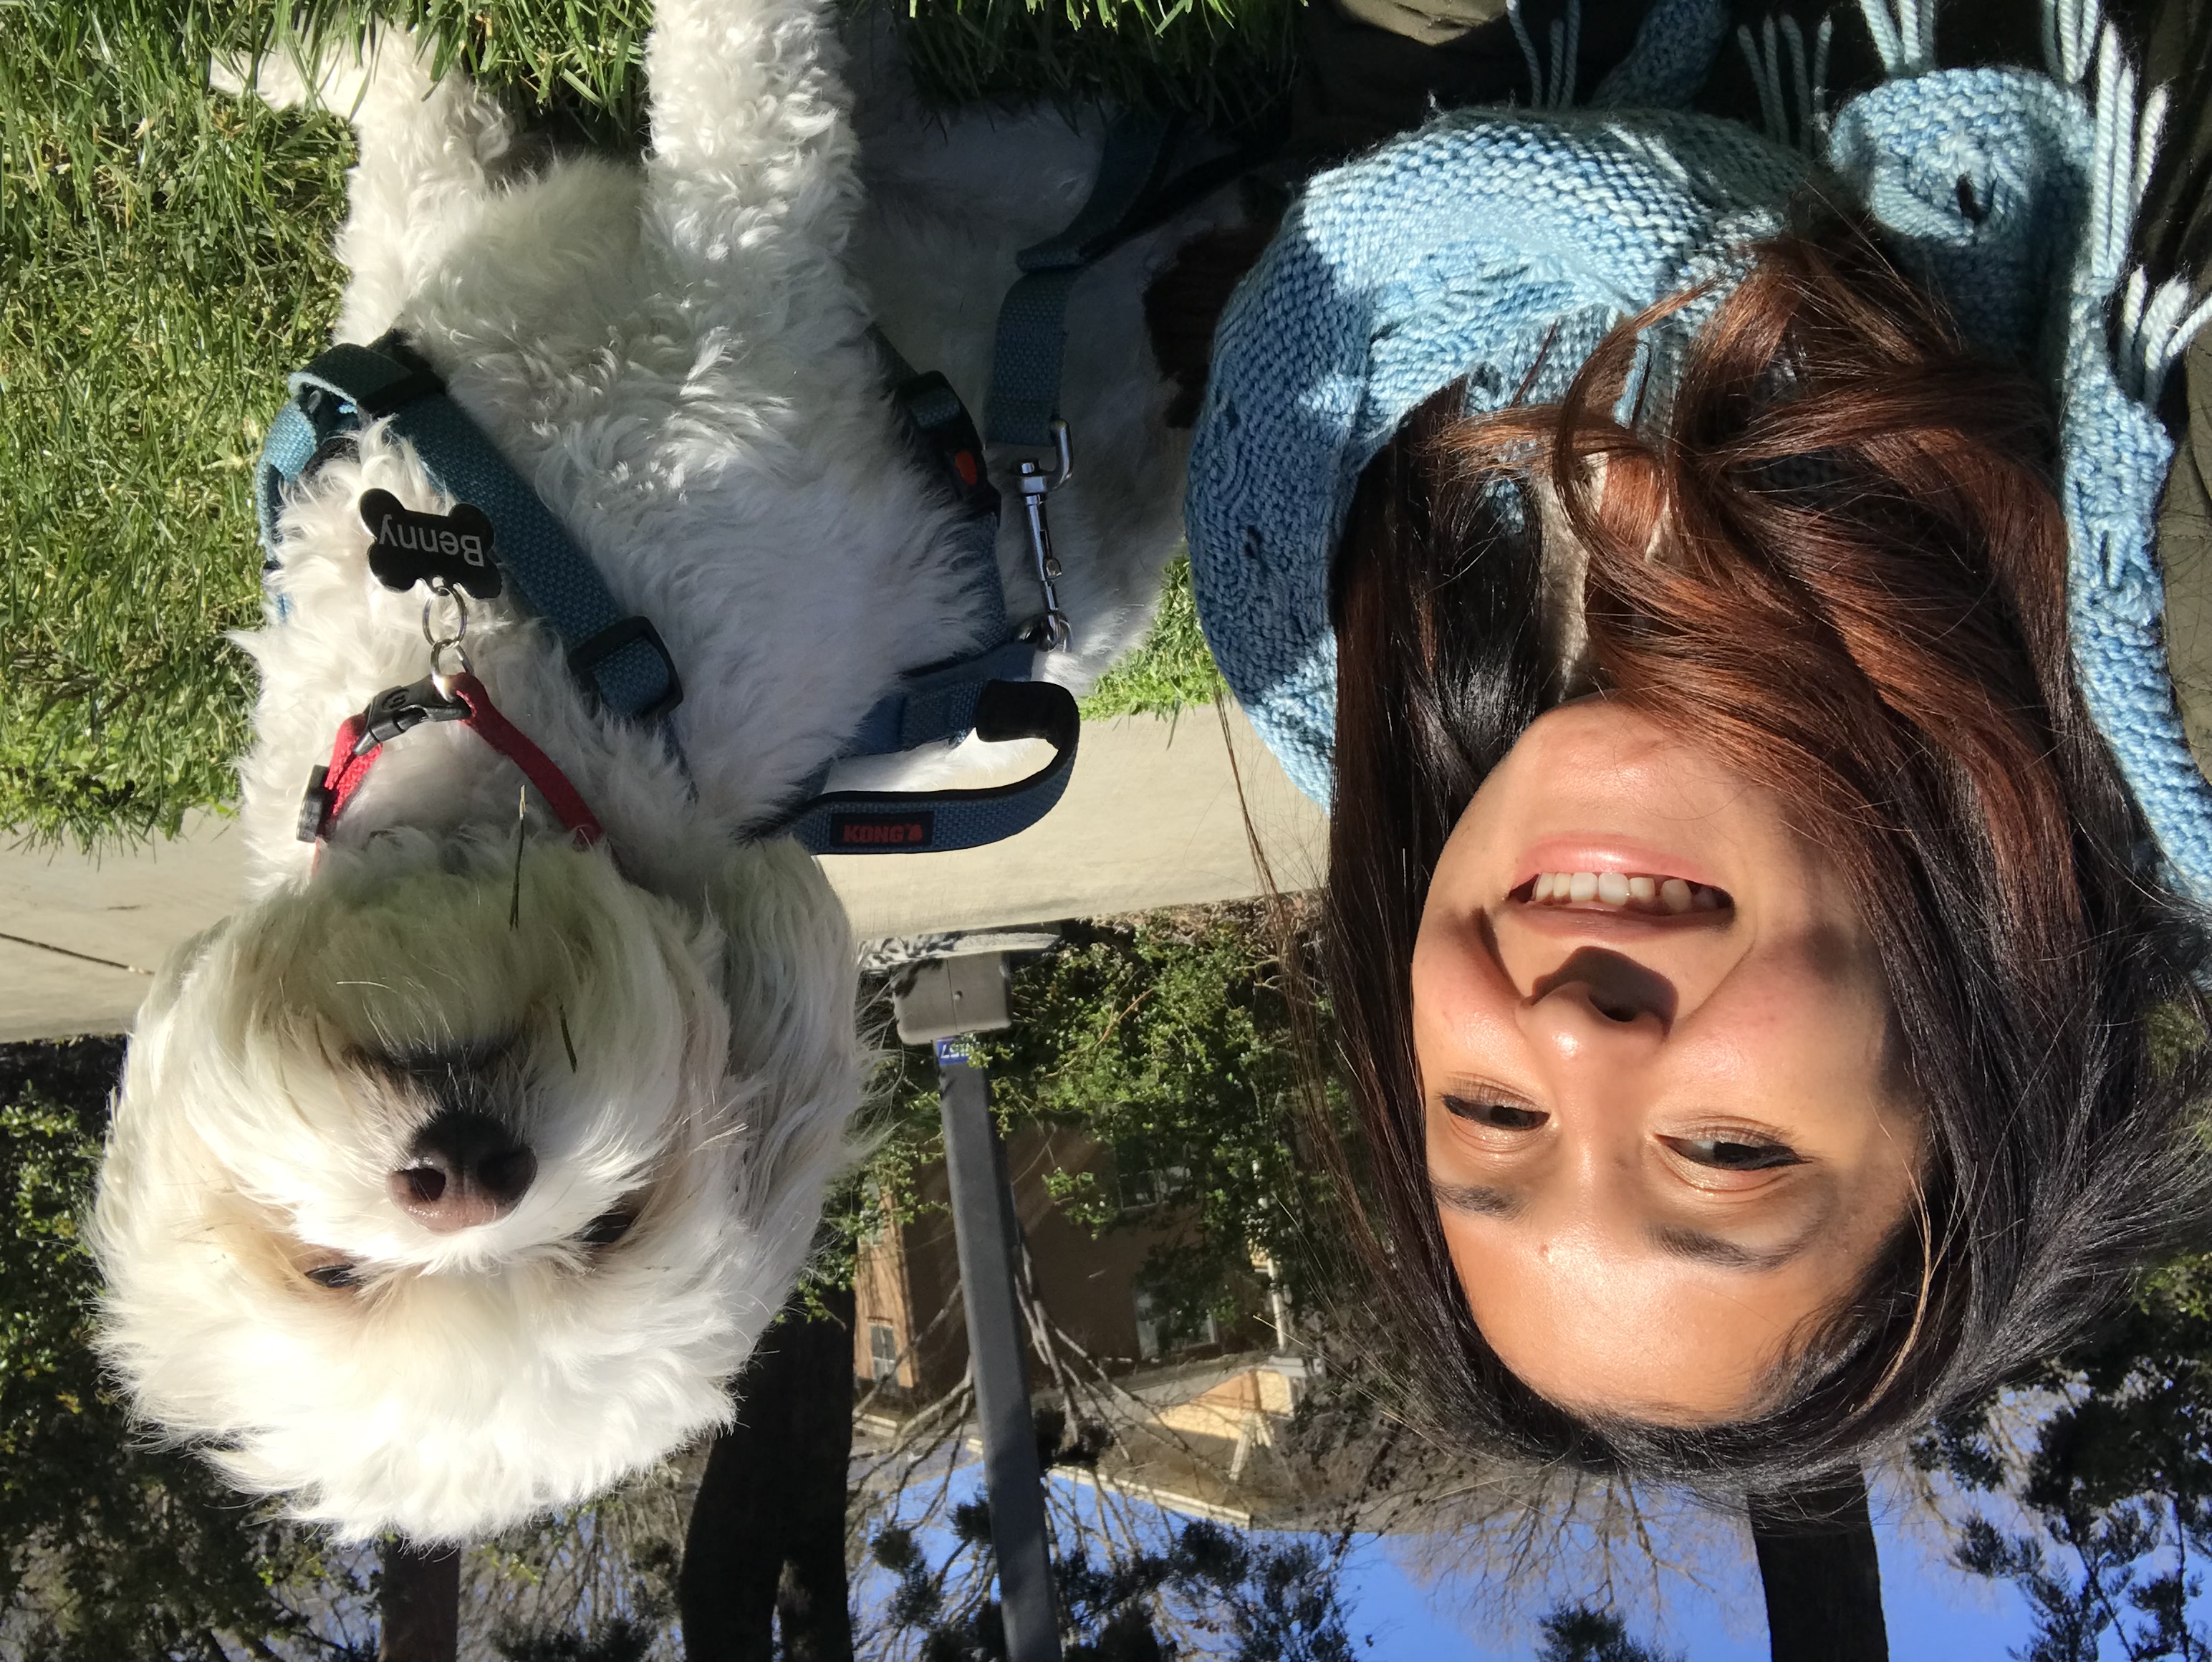 Jillian Padilla posing with her dog in the grass